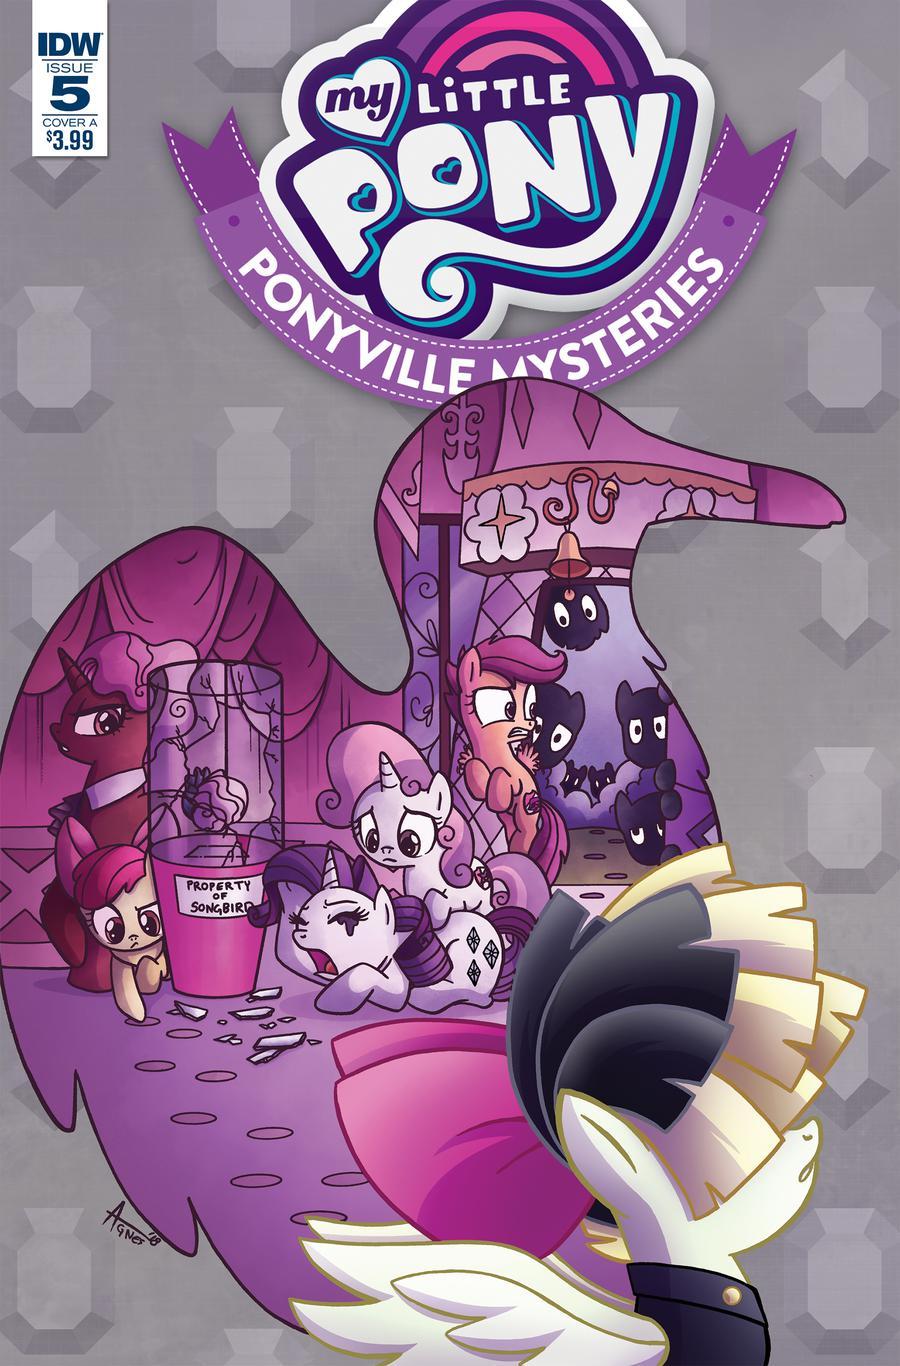 My Little Pony Ponyville Mysteries Vol. 1 #5